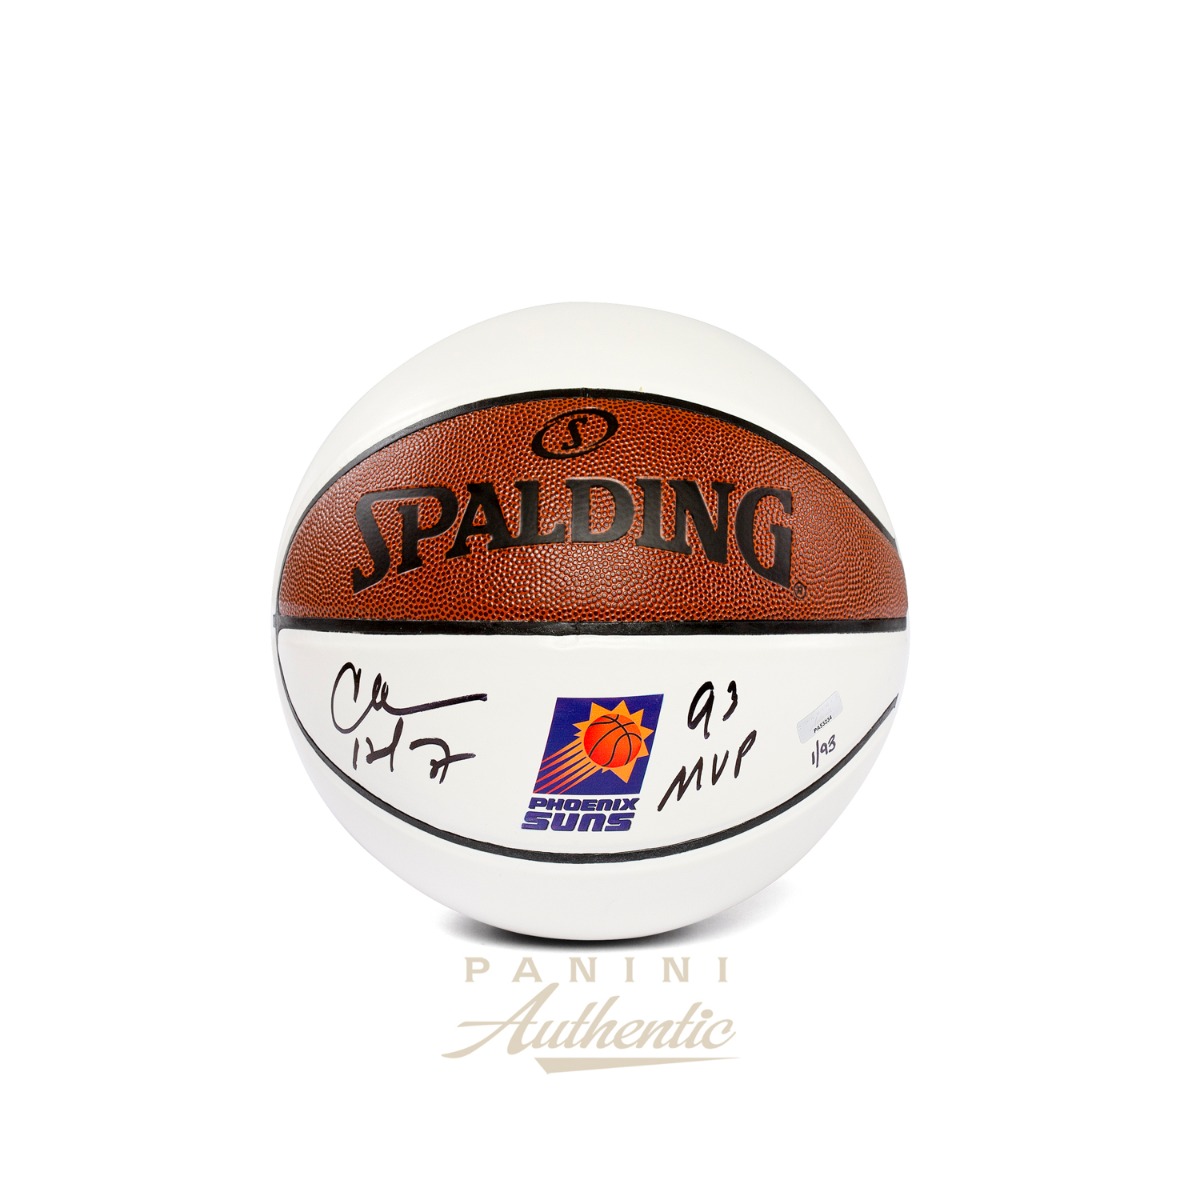 CHARLES BARKLEY  Phoenix Suns 1992 Home Throwback NBA Basketball Jersey